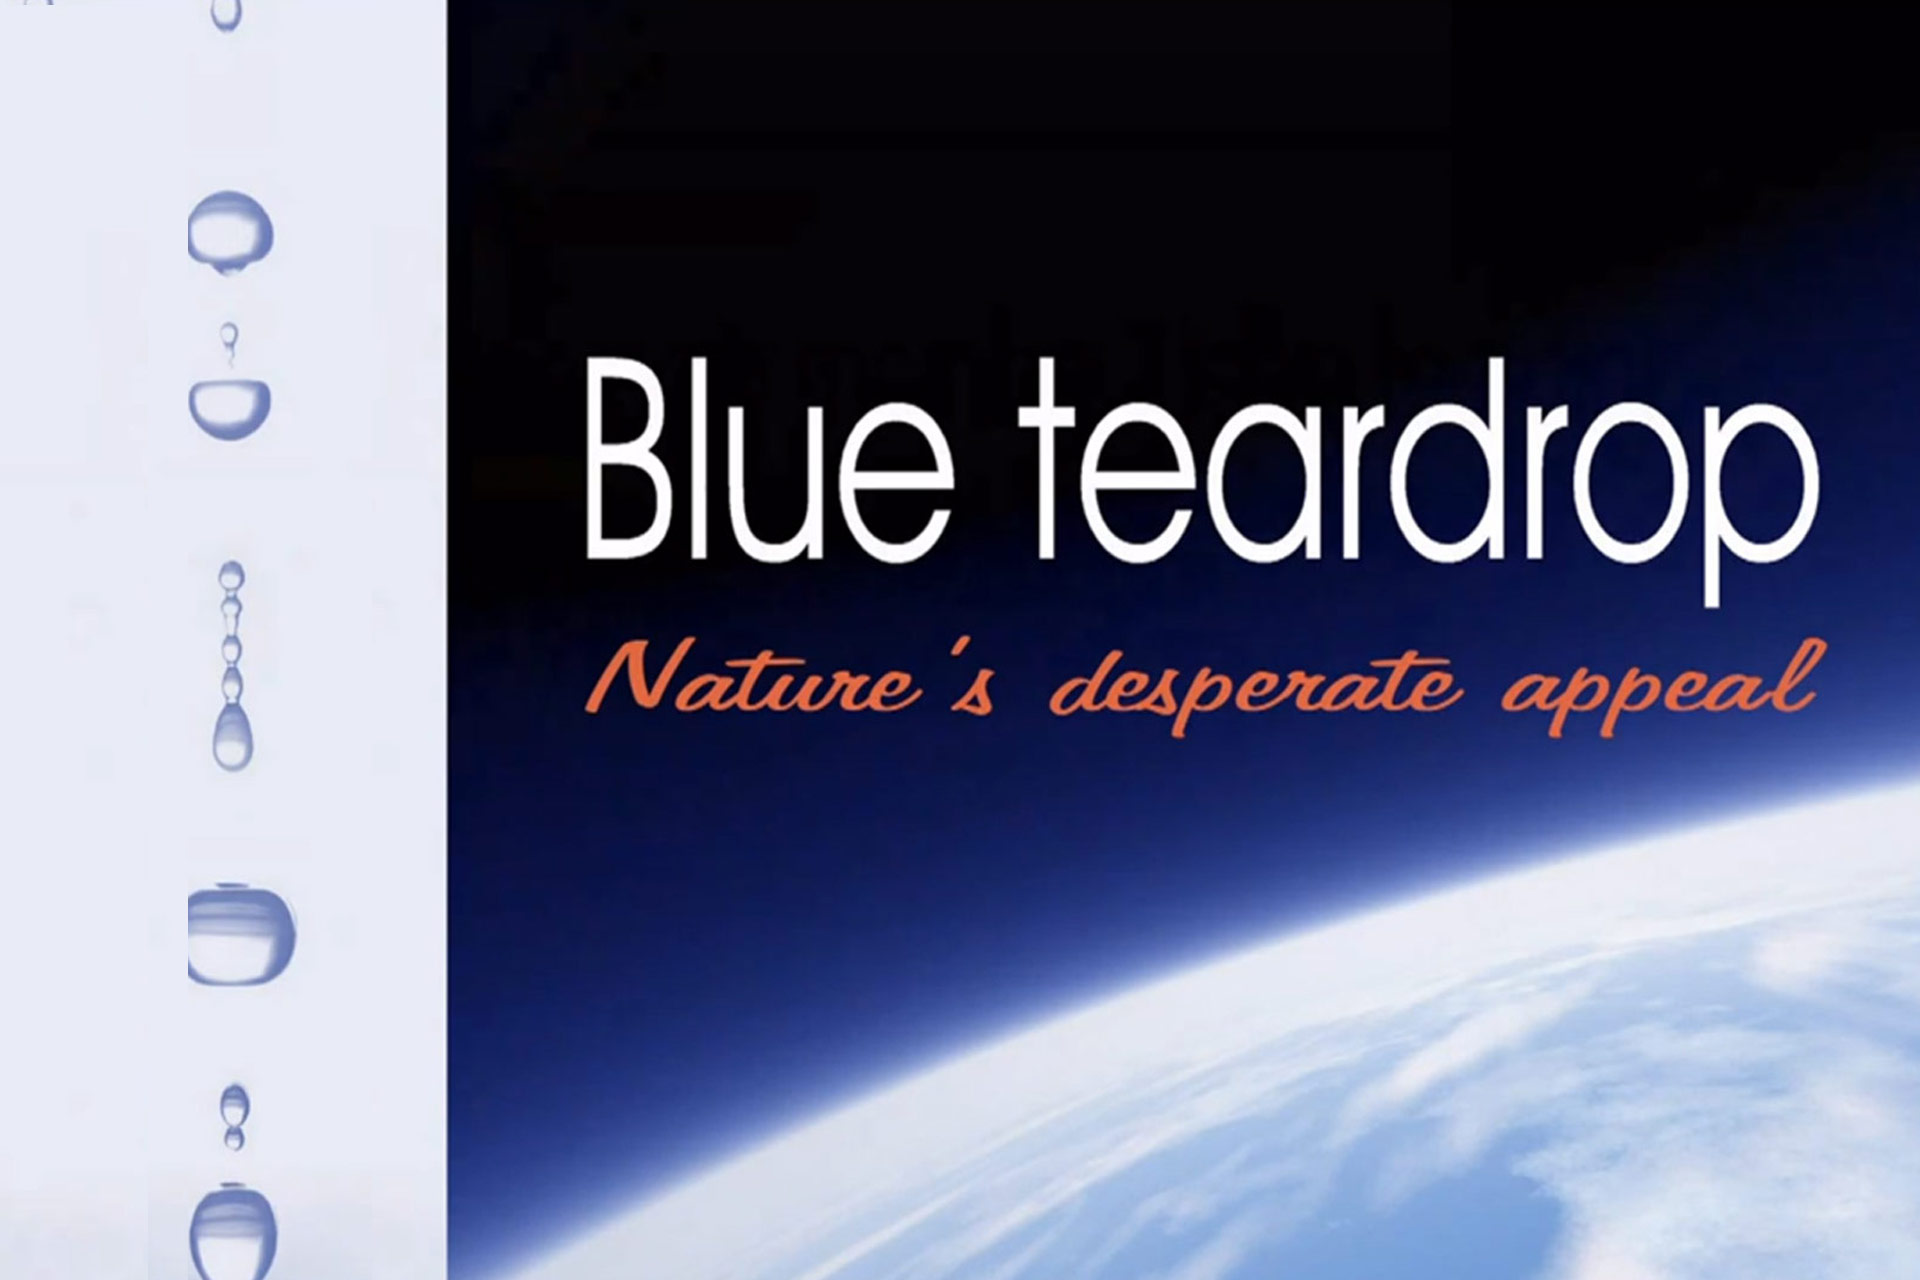 Blue teardrop - Nature's appeal